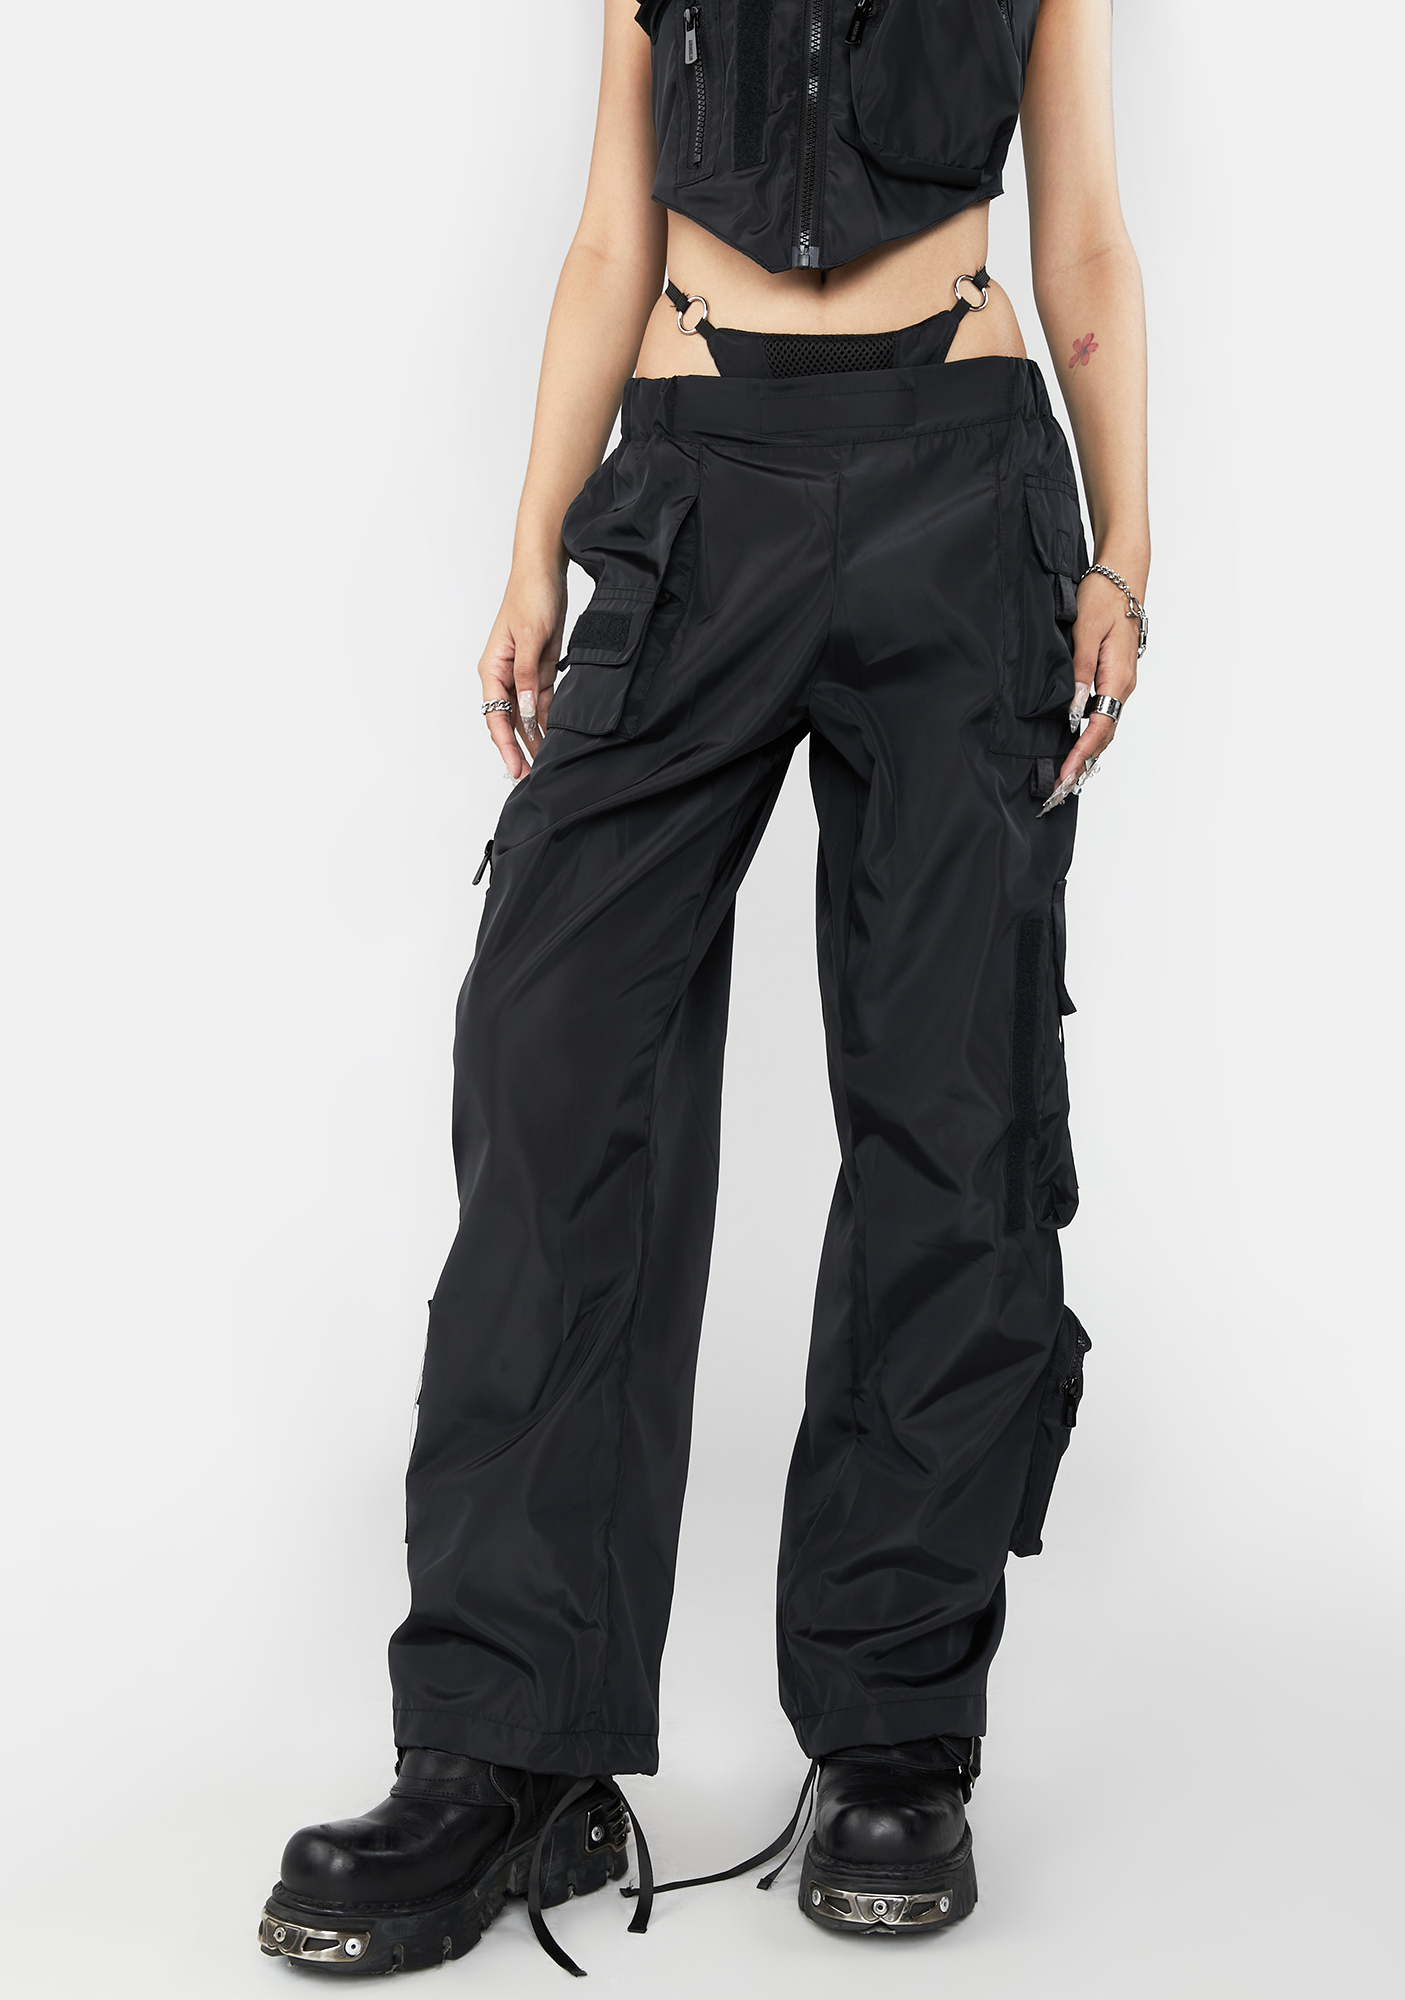 Namilia Black Nylon Tactical Pants With Detachable Panty | Dolls Kill